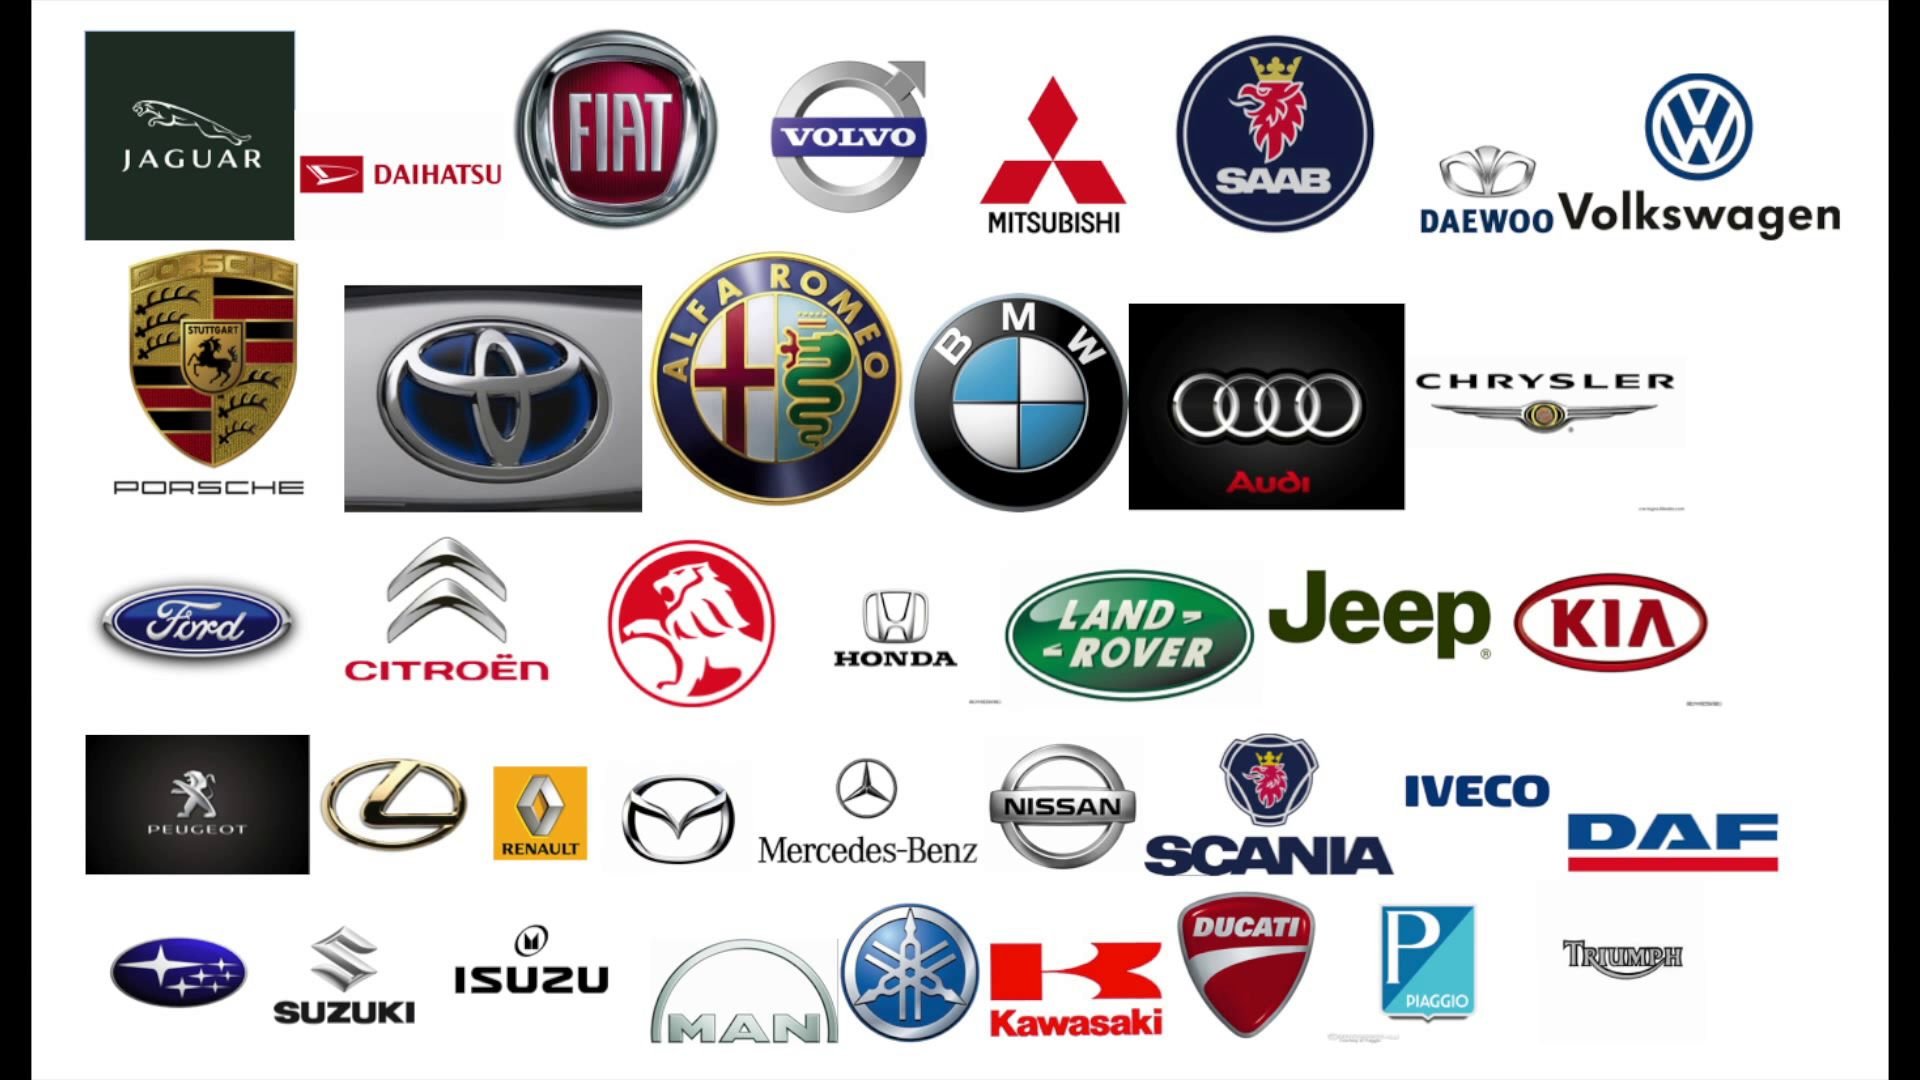 Все марки автомобилей со значками и названиями. Марки автомобилей. Логотипы машин. Логотипы автомобильных марок. Немецкие марки автомобилей.